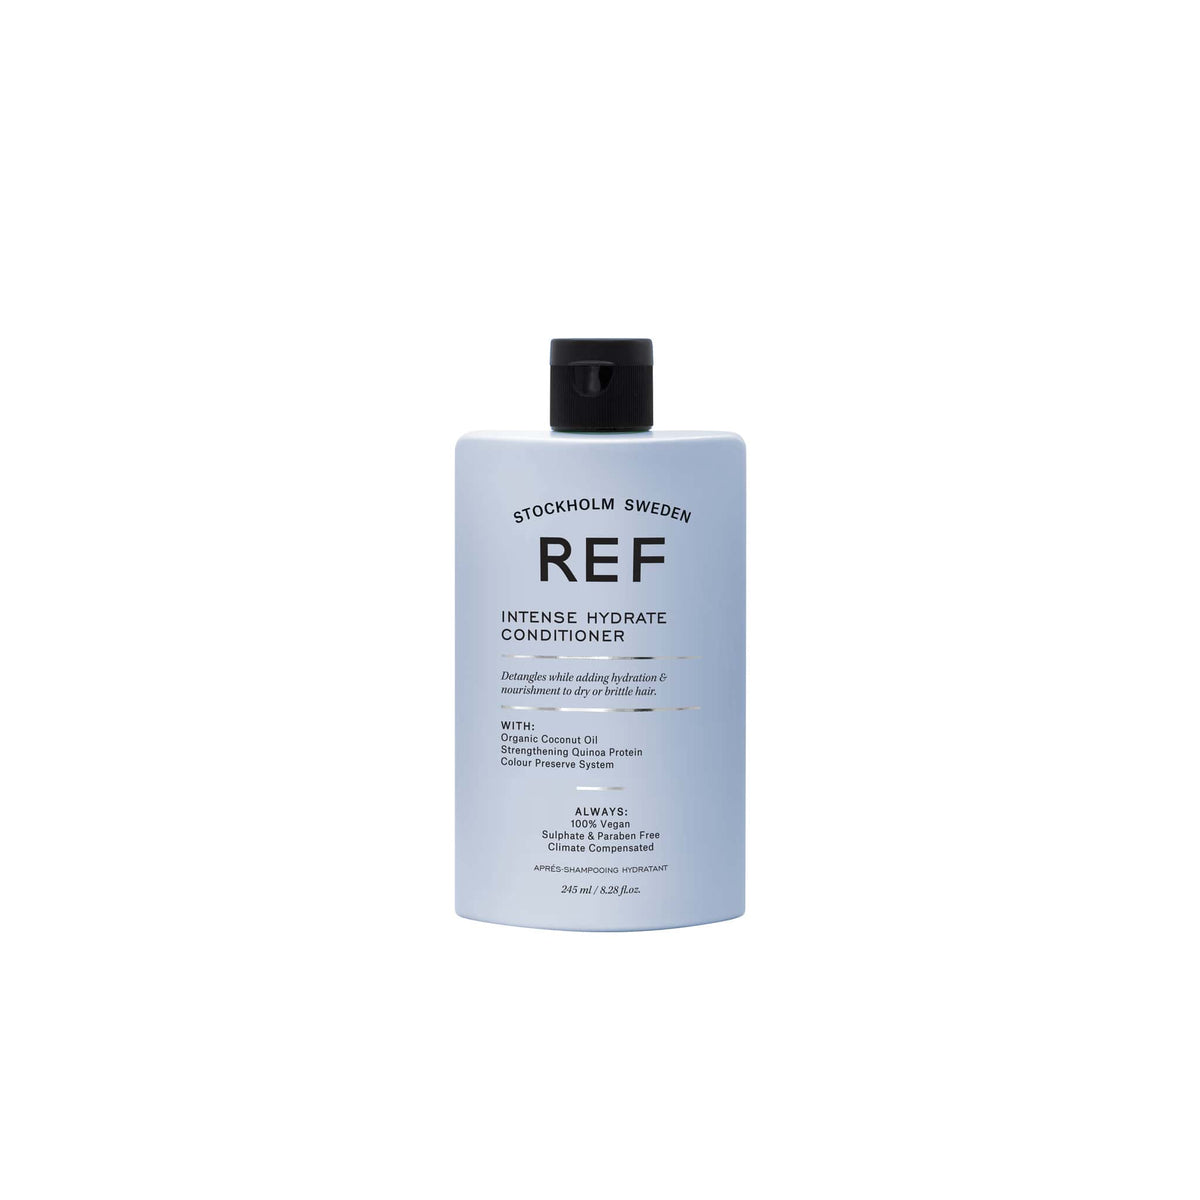 REF. Intense Hydrate Conditioner 245ml